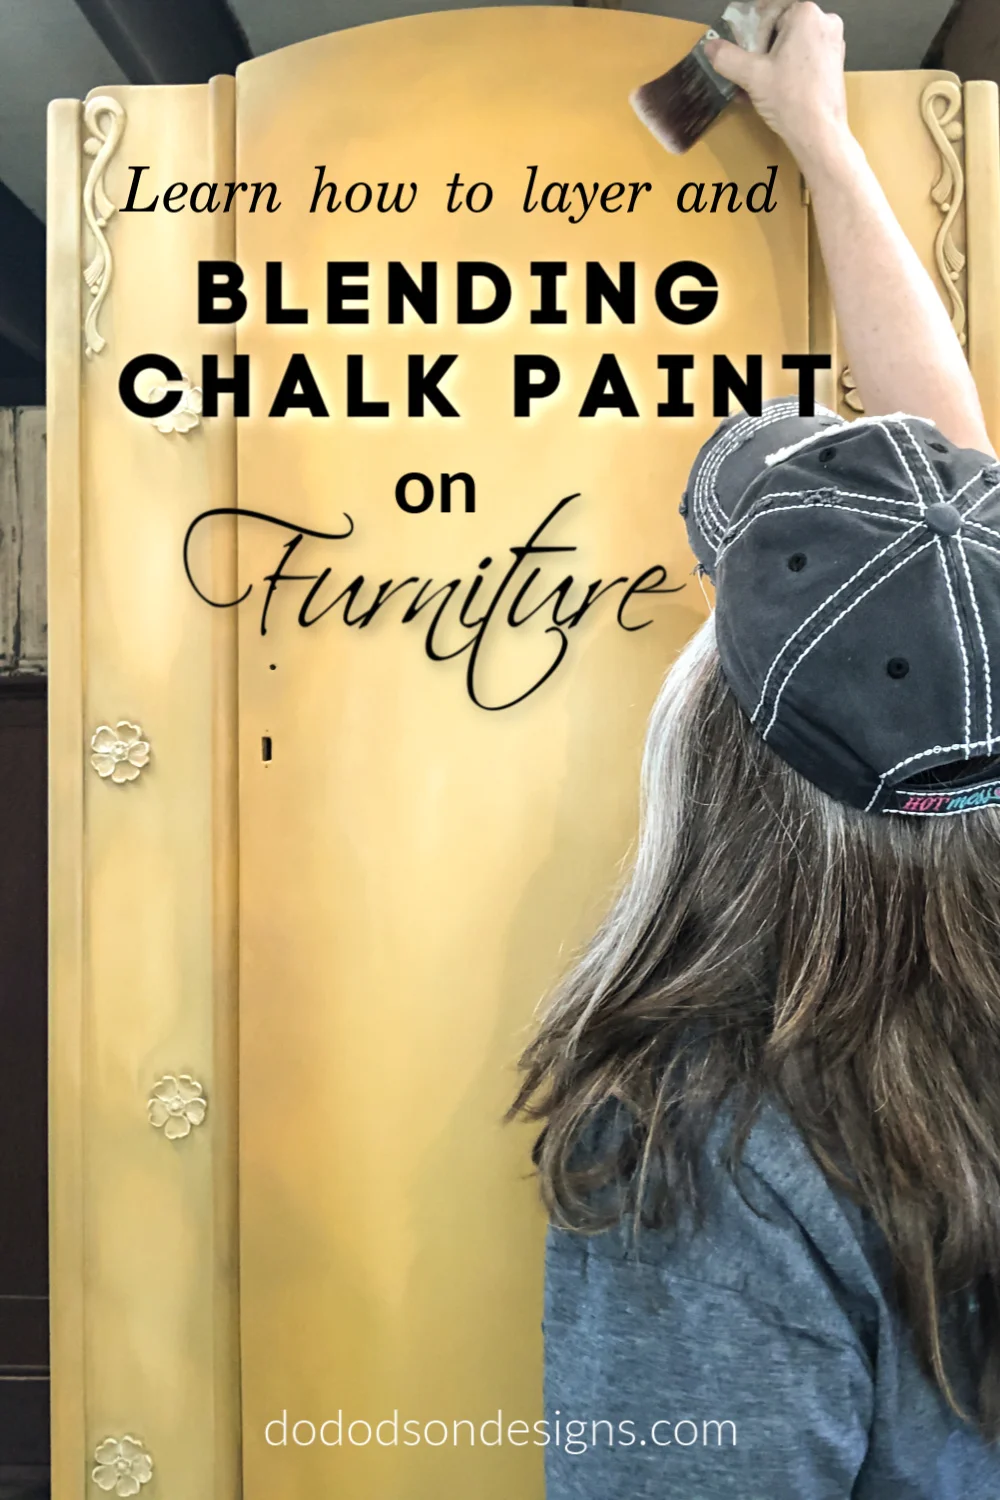 My Best Tips For Blending Chalk Paint On Furniture